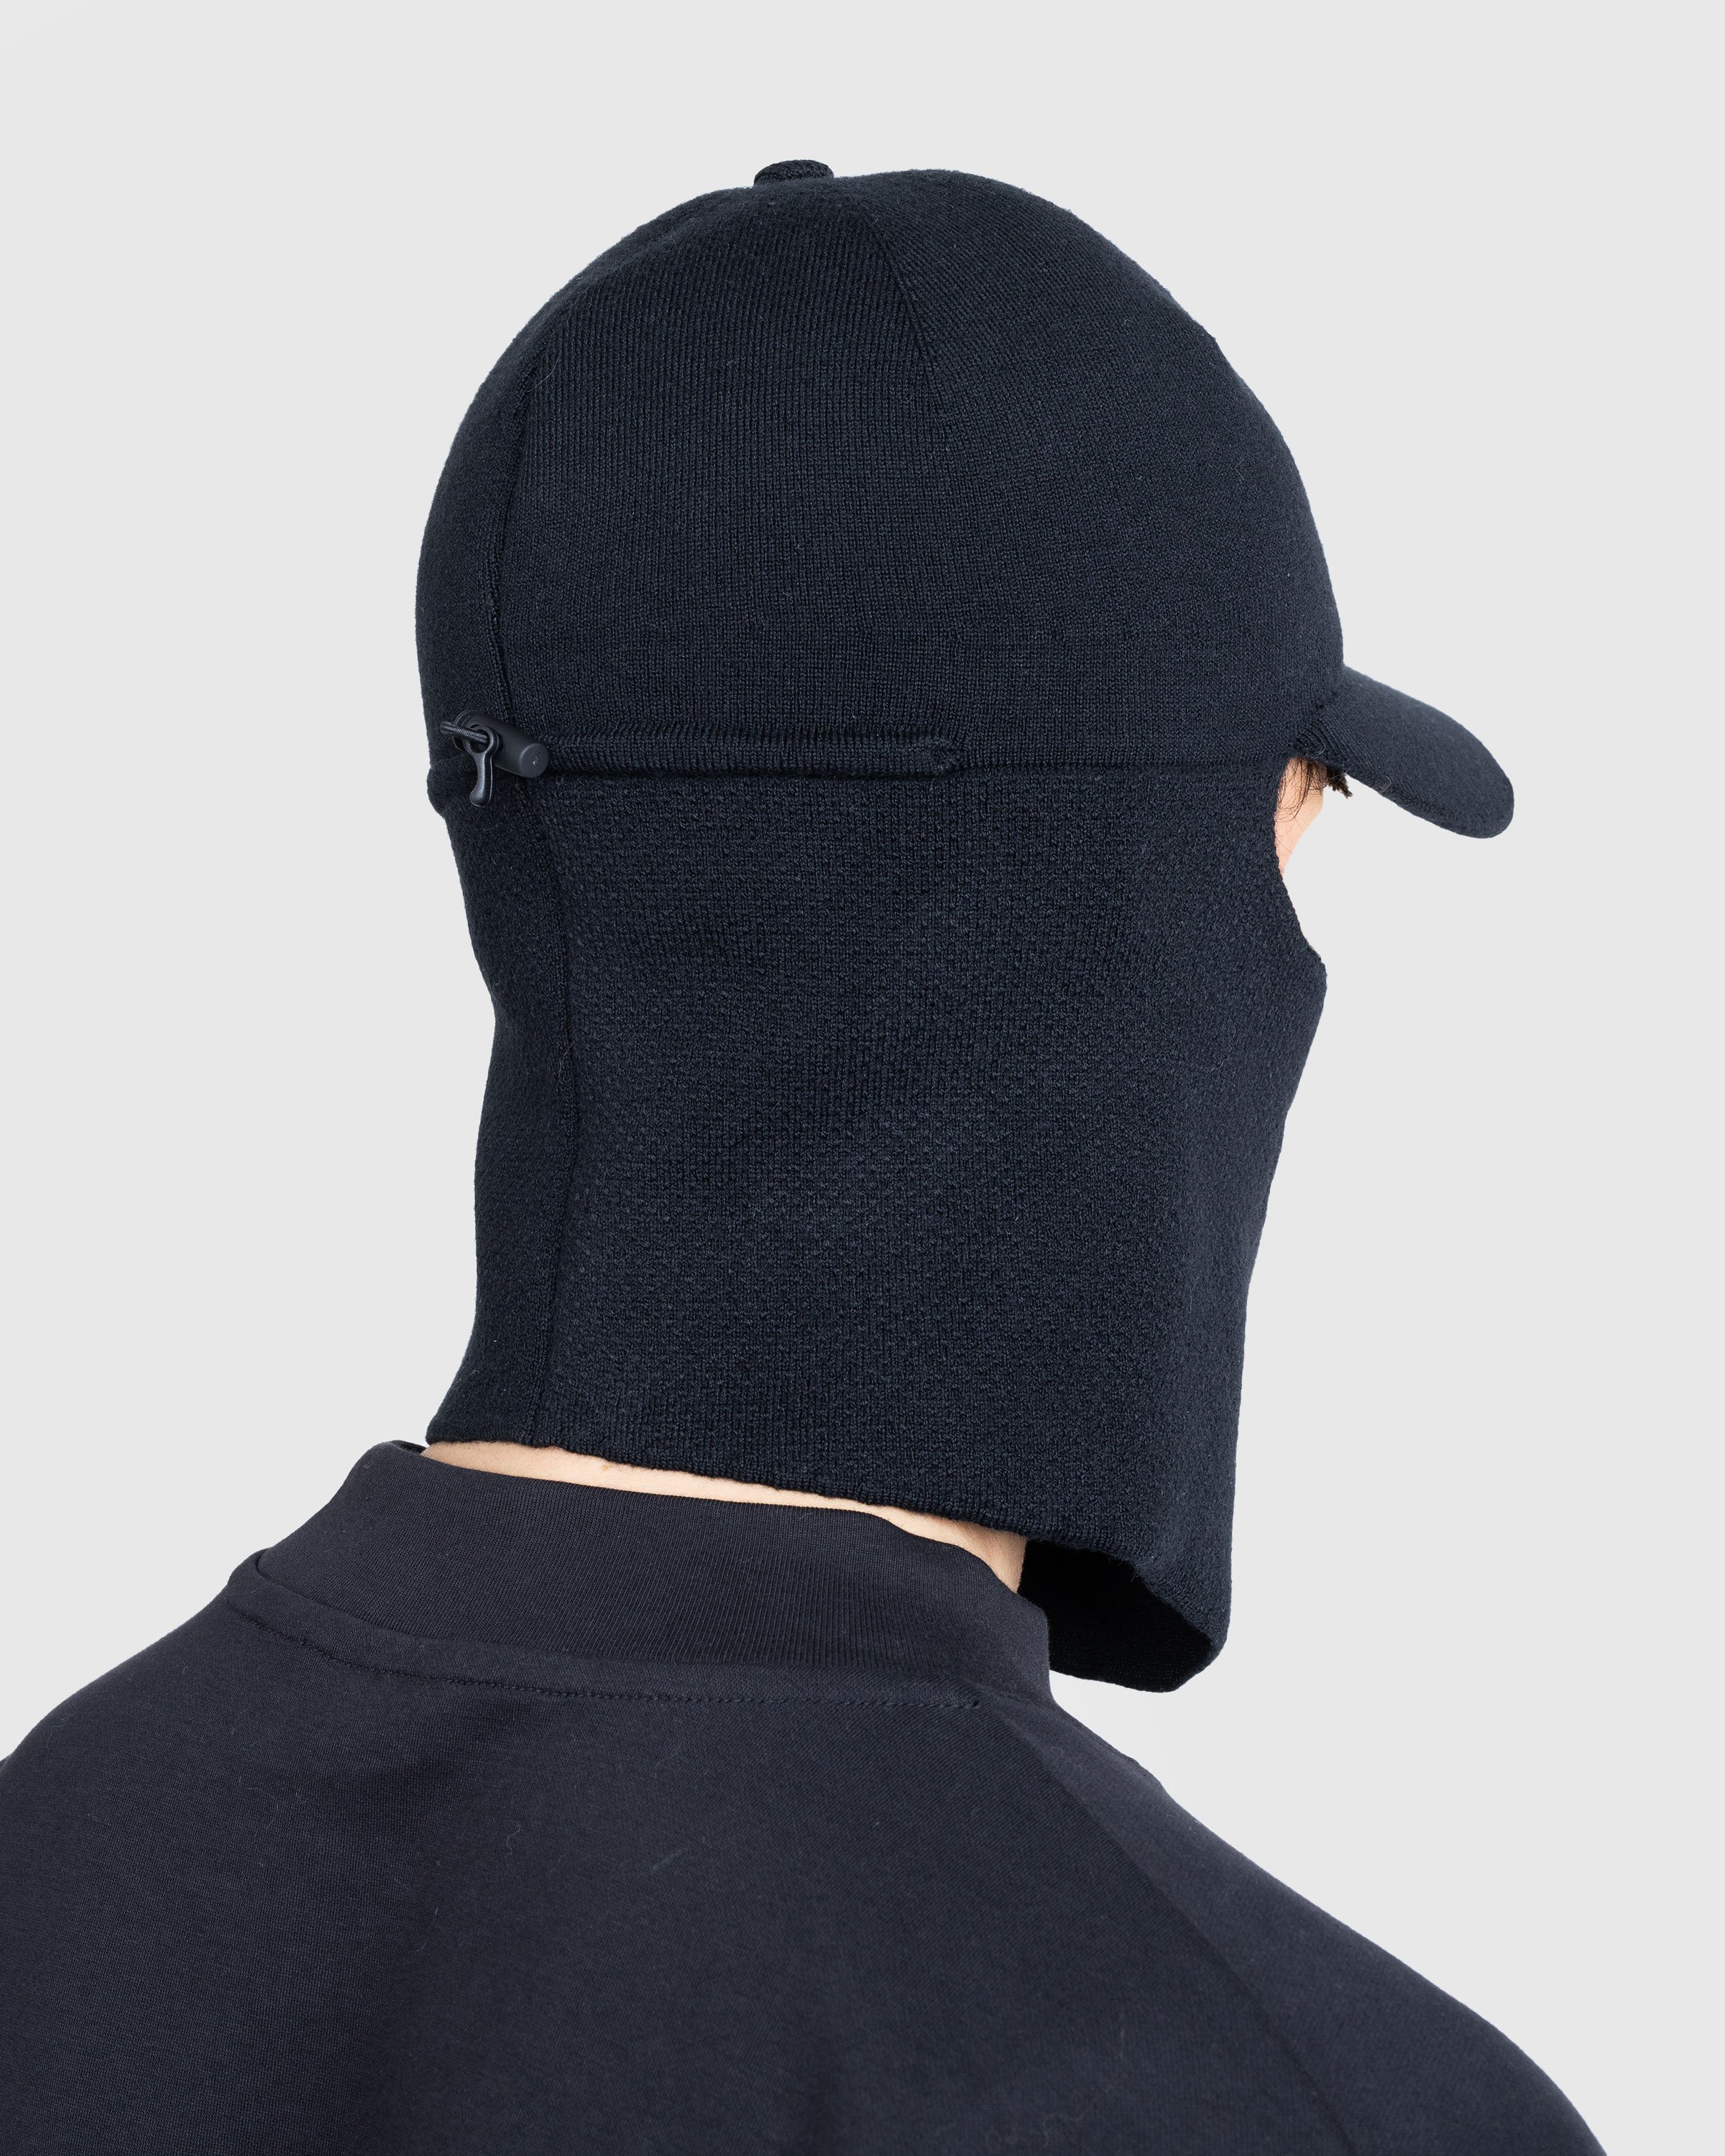 Reebok - Knit Mask Hat Black - Accessories - Black - Image 5